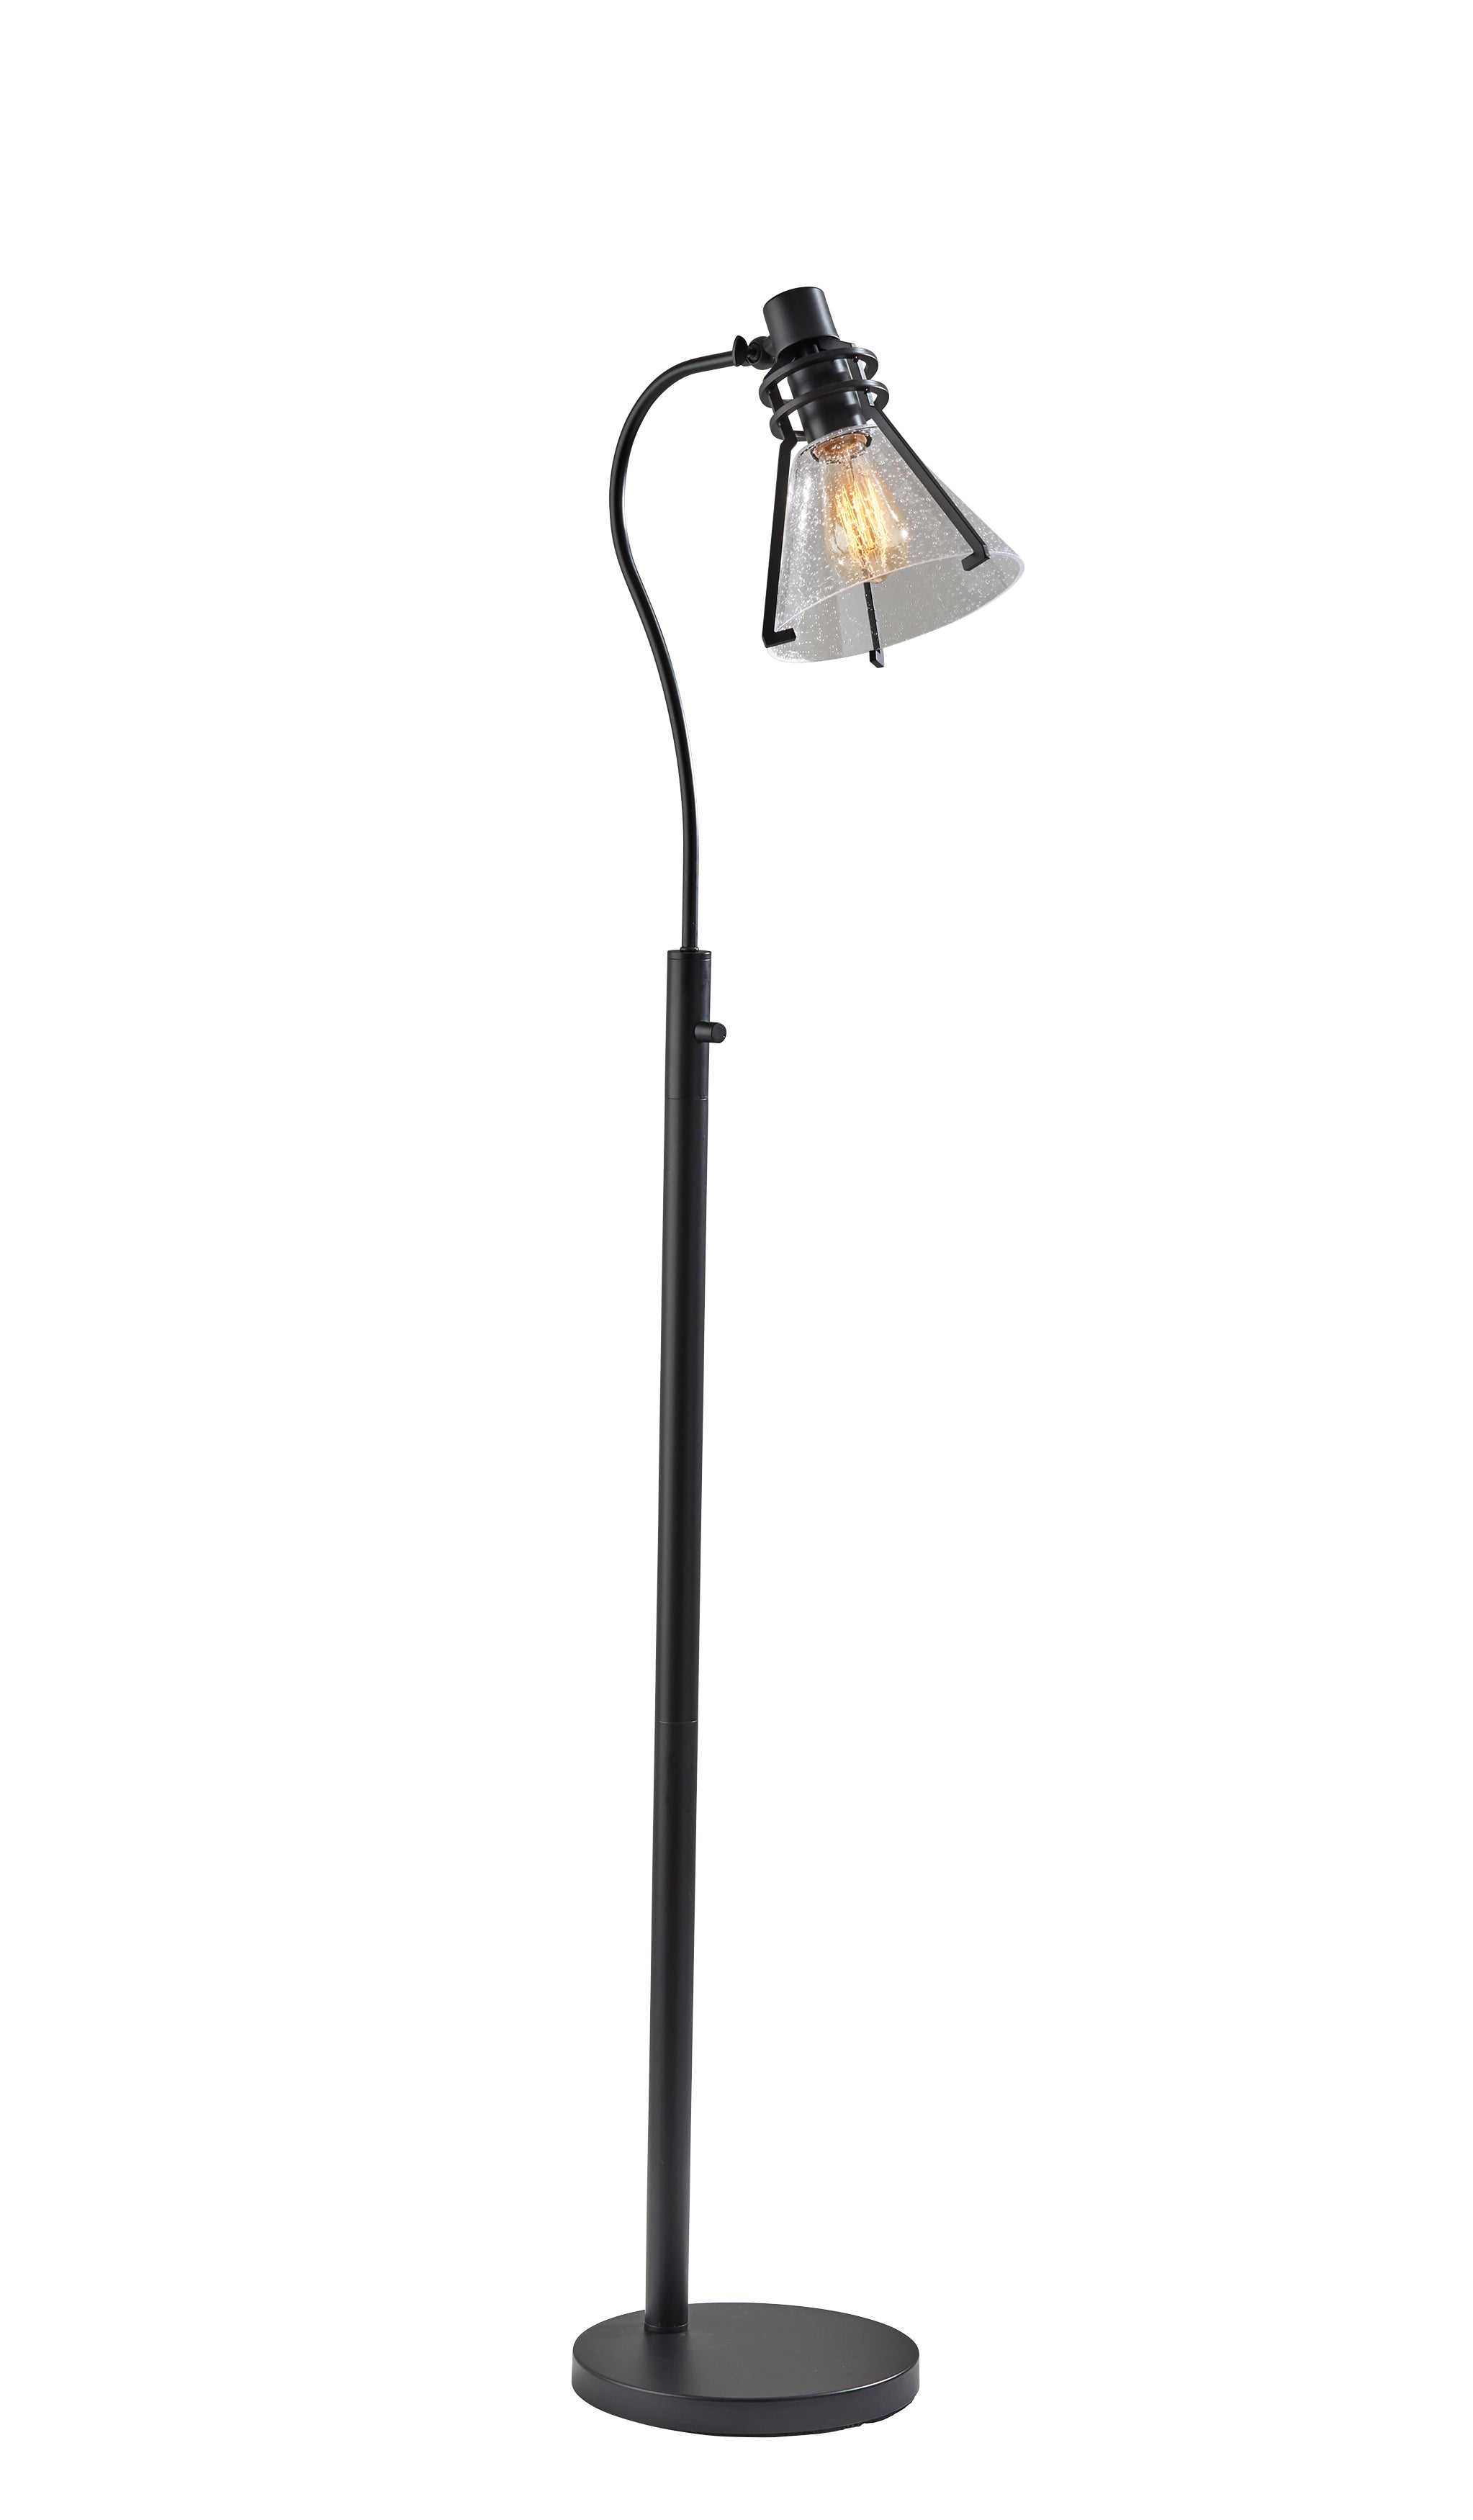 BECKETT Lampe sur pied Noir - 2129-01 | ADESSO